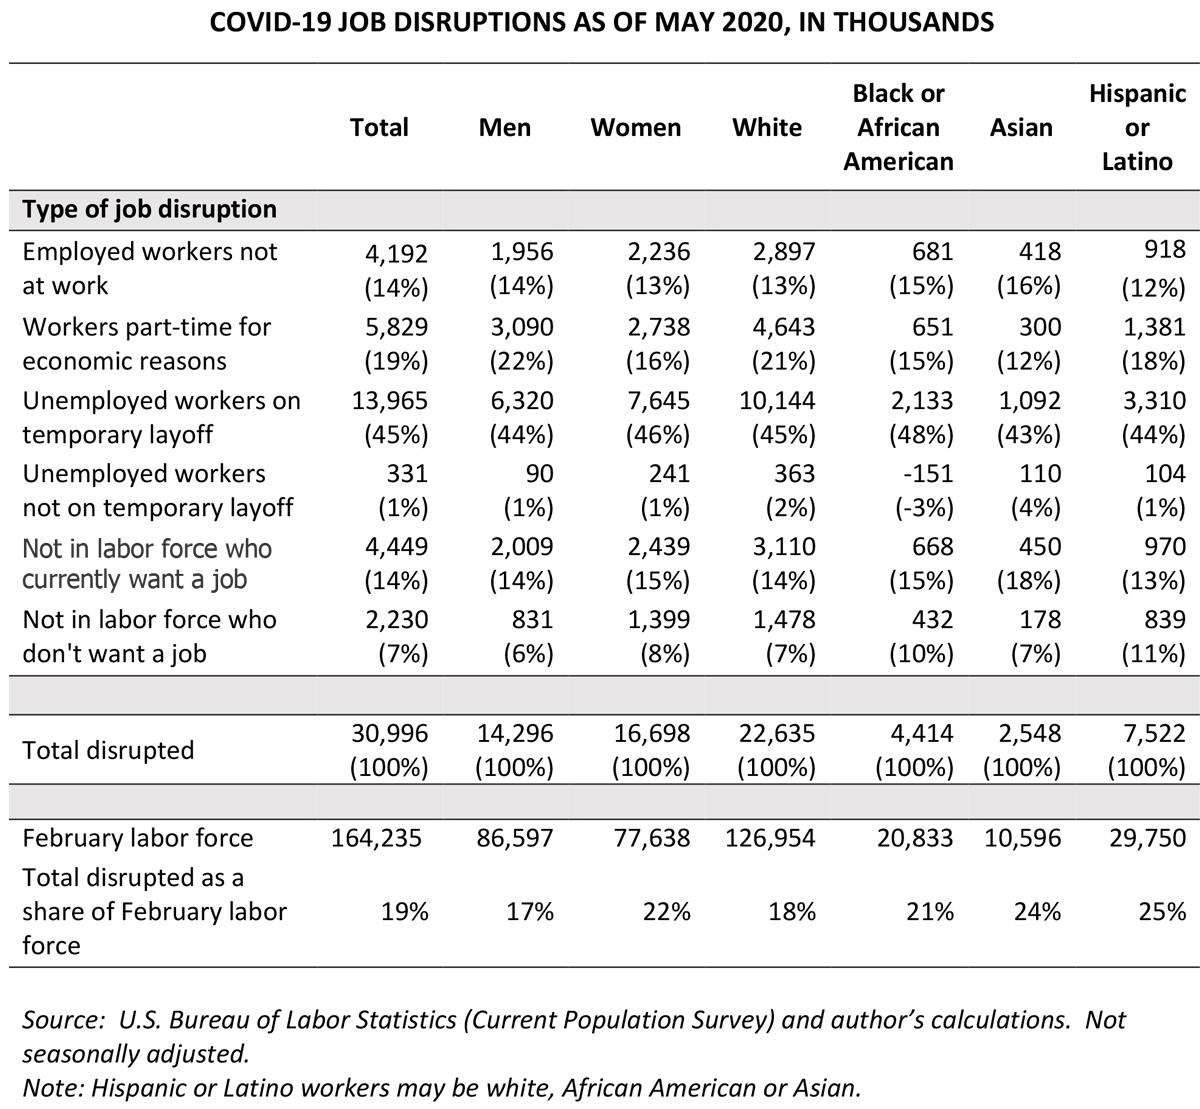 COVID-19 job disruptions by May 2020 table